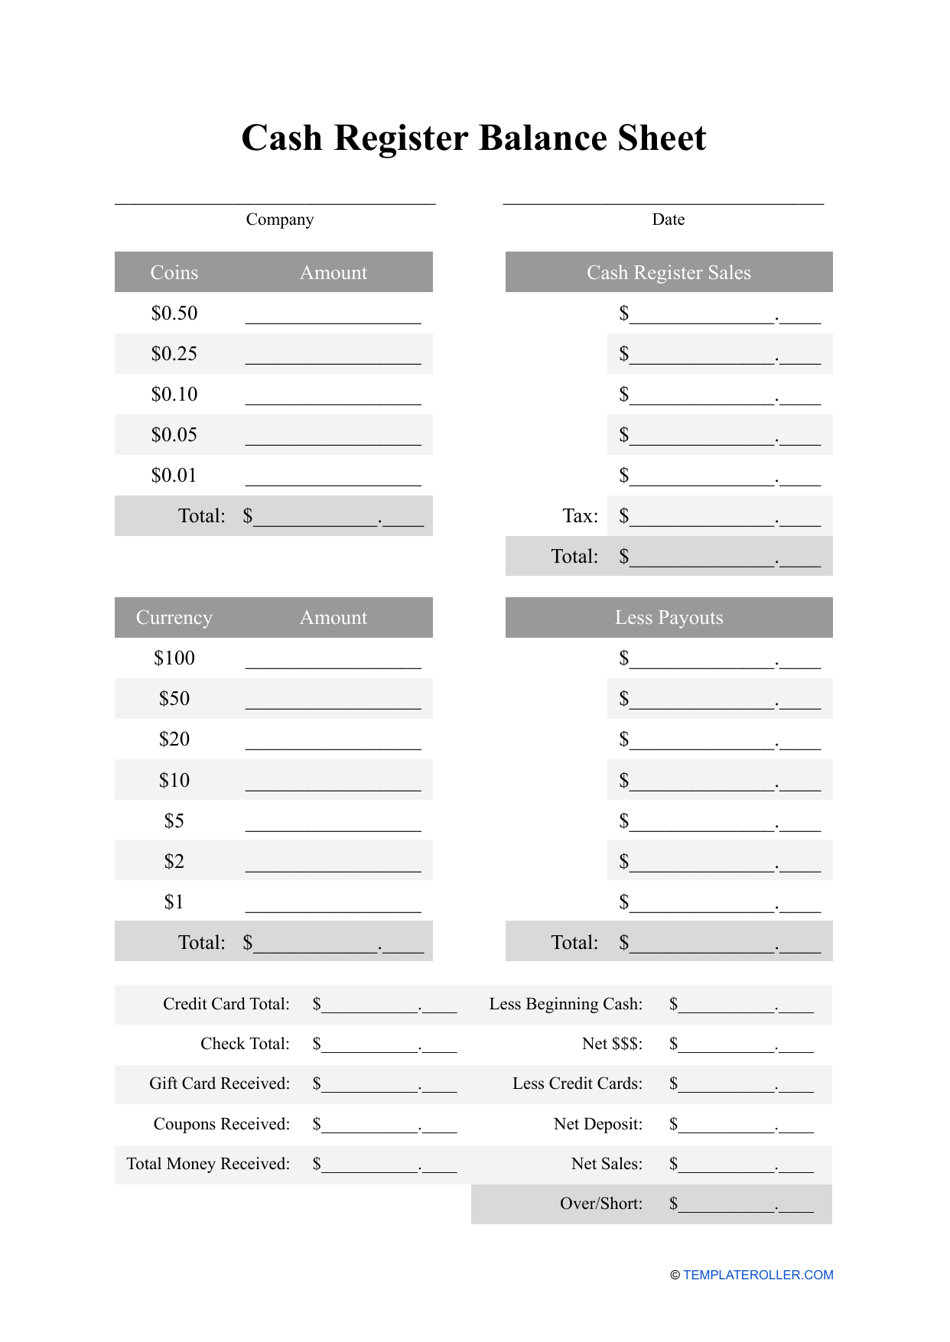 Cash Register Balance Sheet Template Download Printable Pdf Templateroller